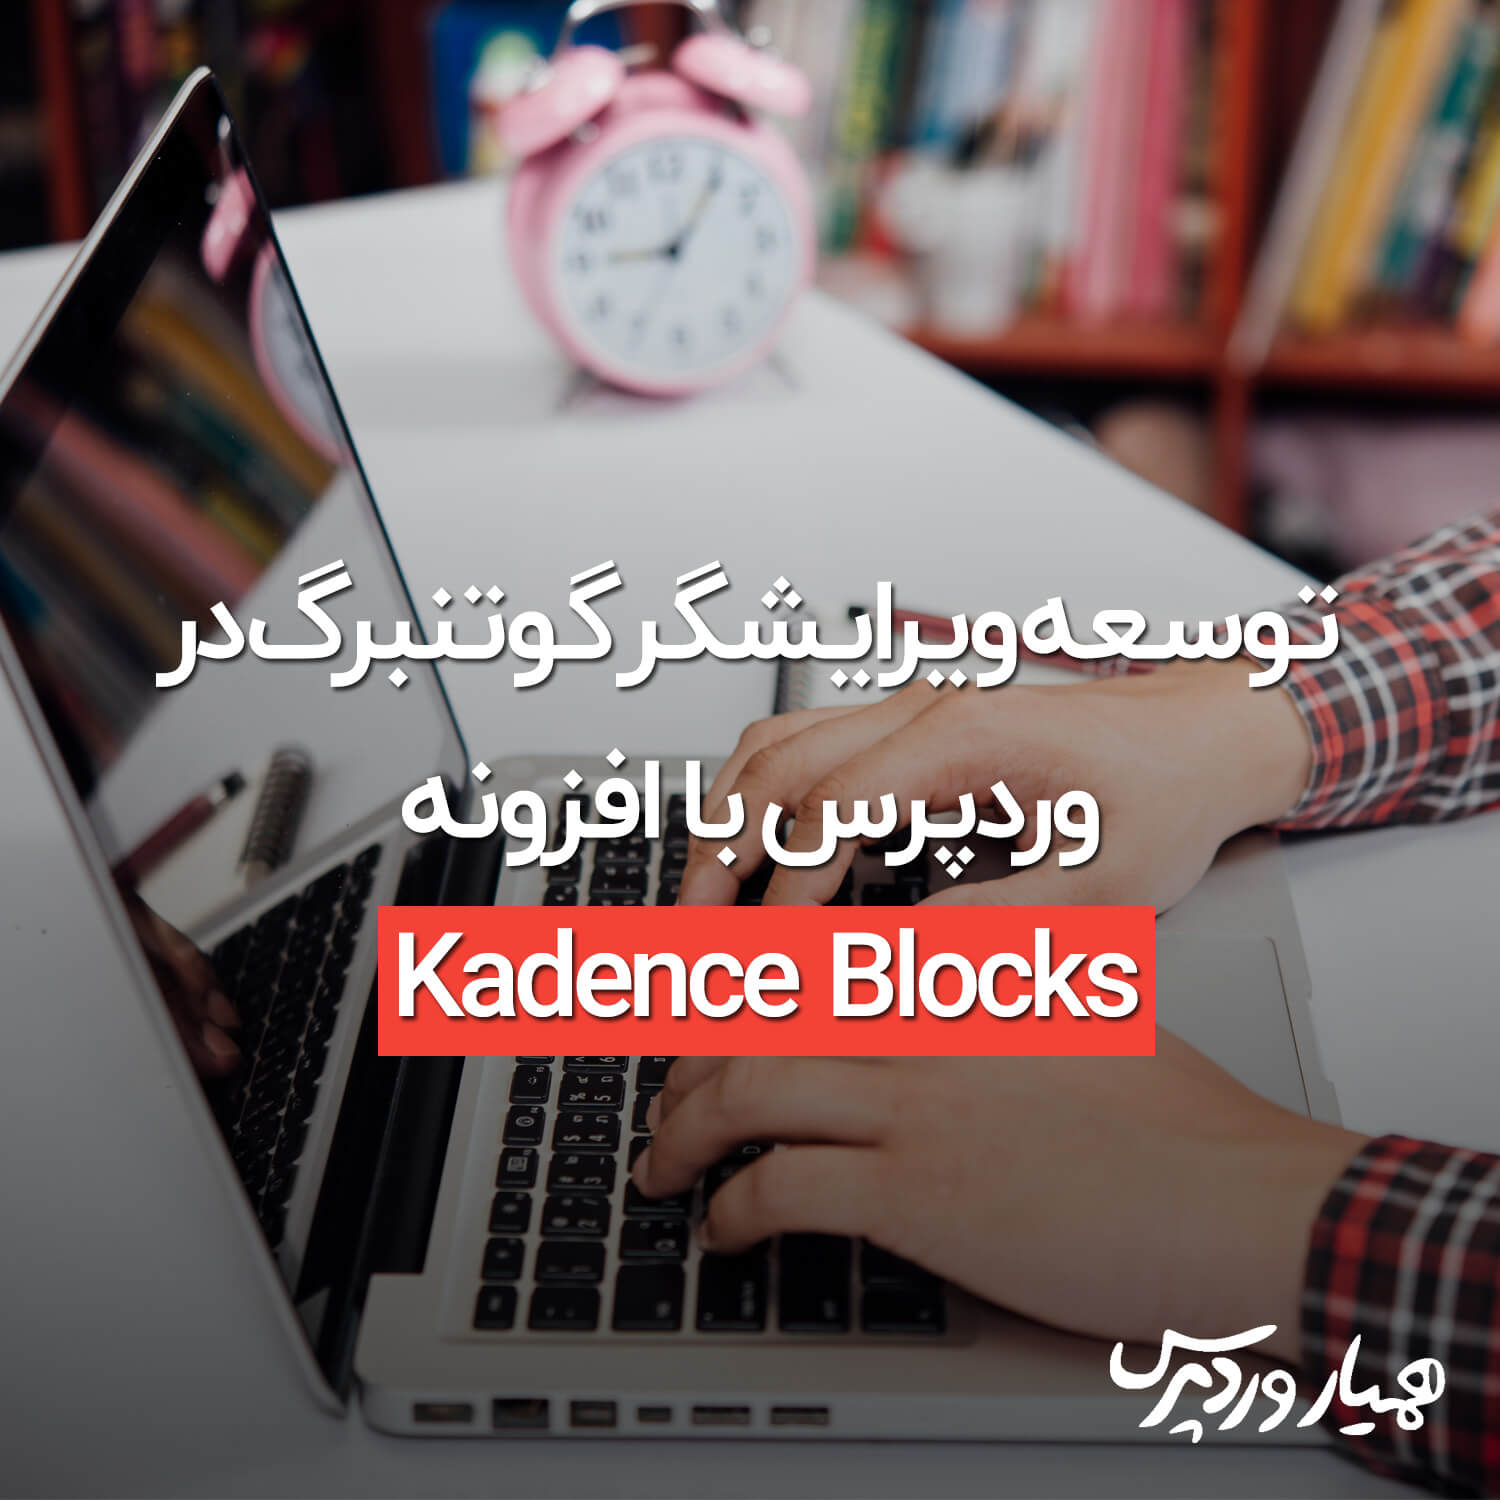 kandence block- توسعه ویرایشگر گوتنبرگ